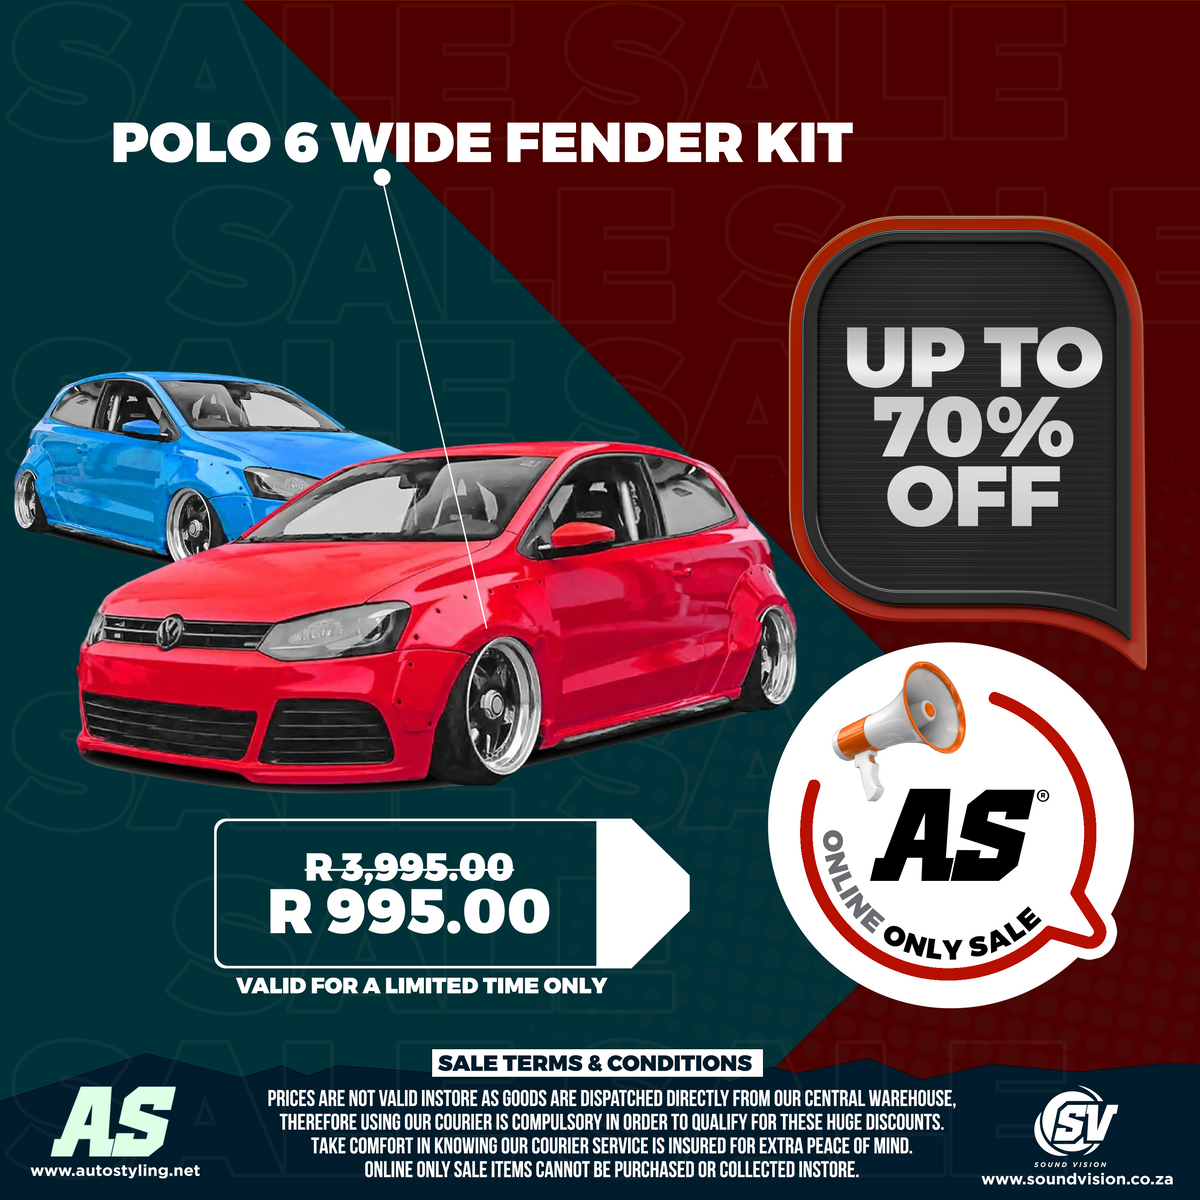 Polo 6 wide fender kit